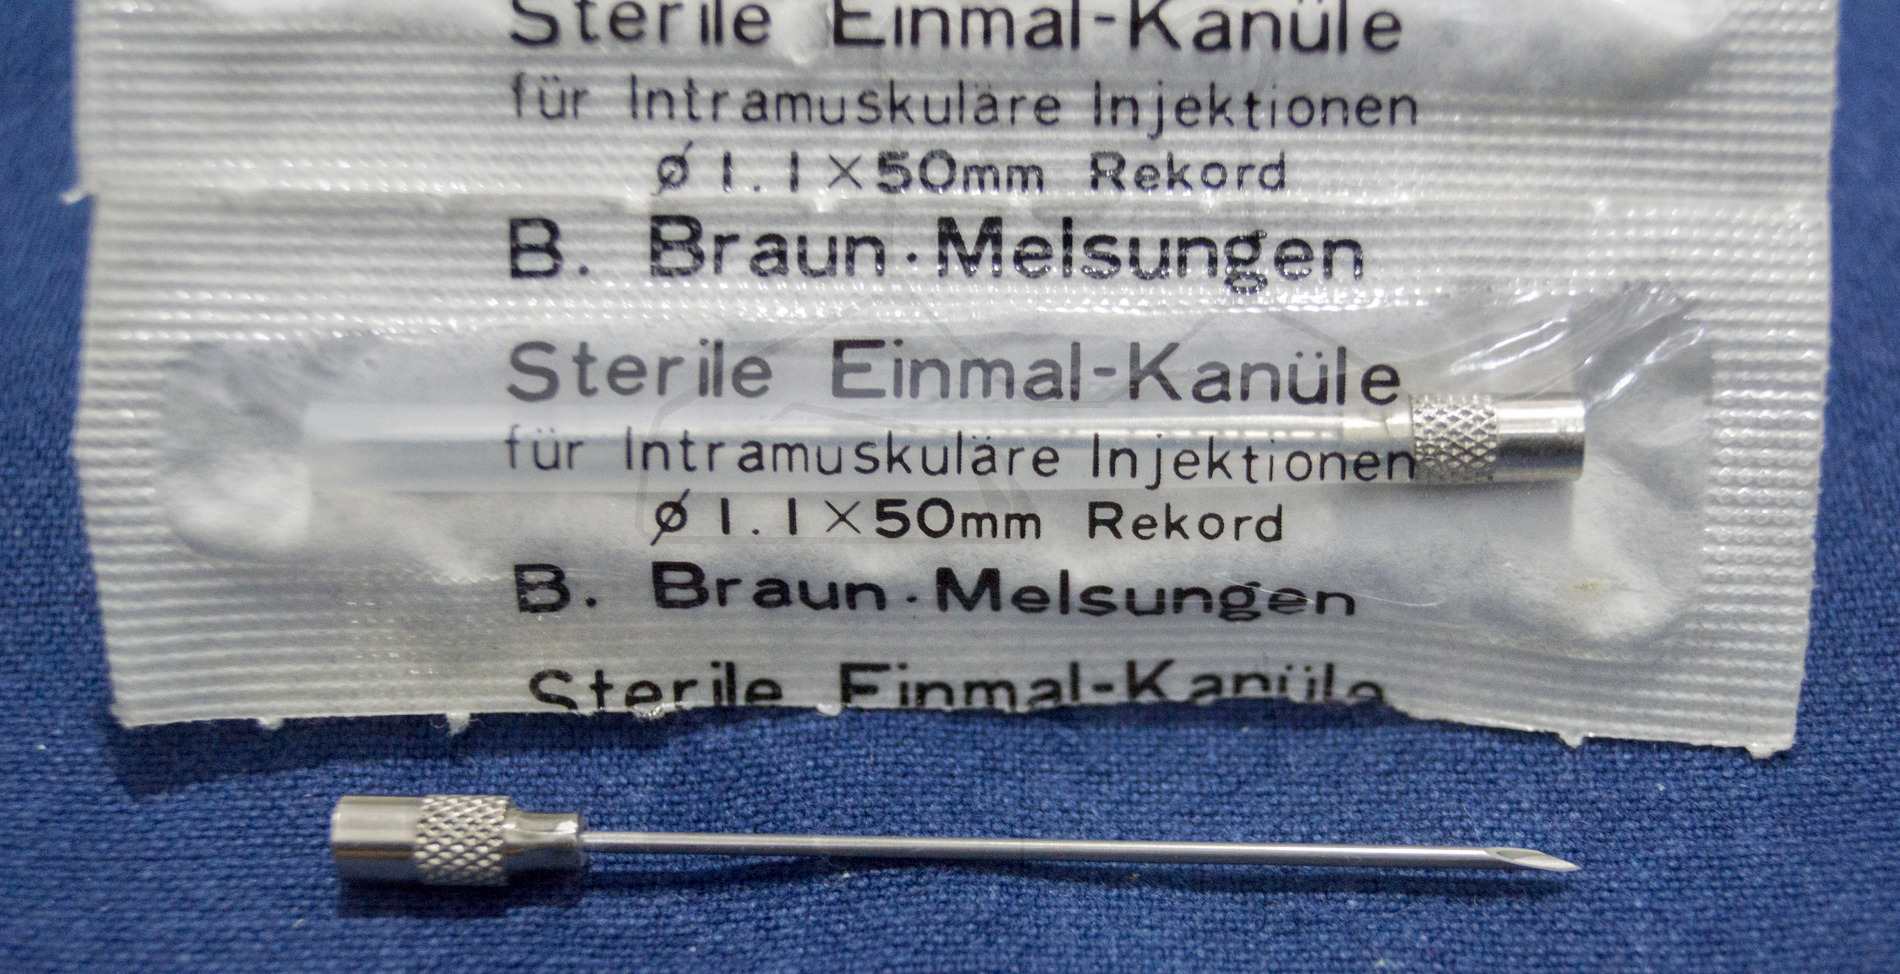 Sterile Einweg Kanüle, B. Braun, ca. Anfang 1970, Kanüle und sterile Verpackung